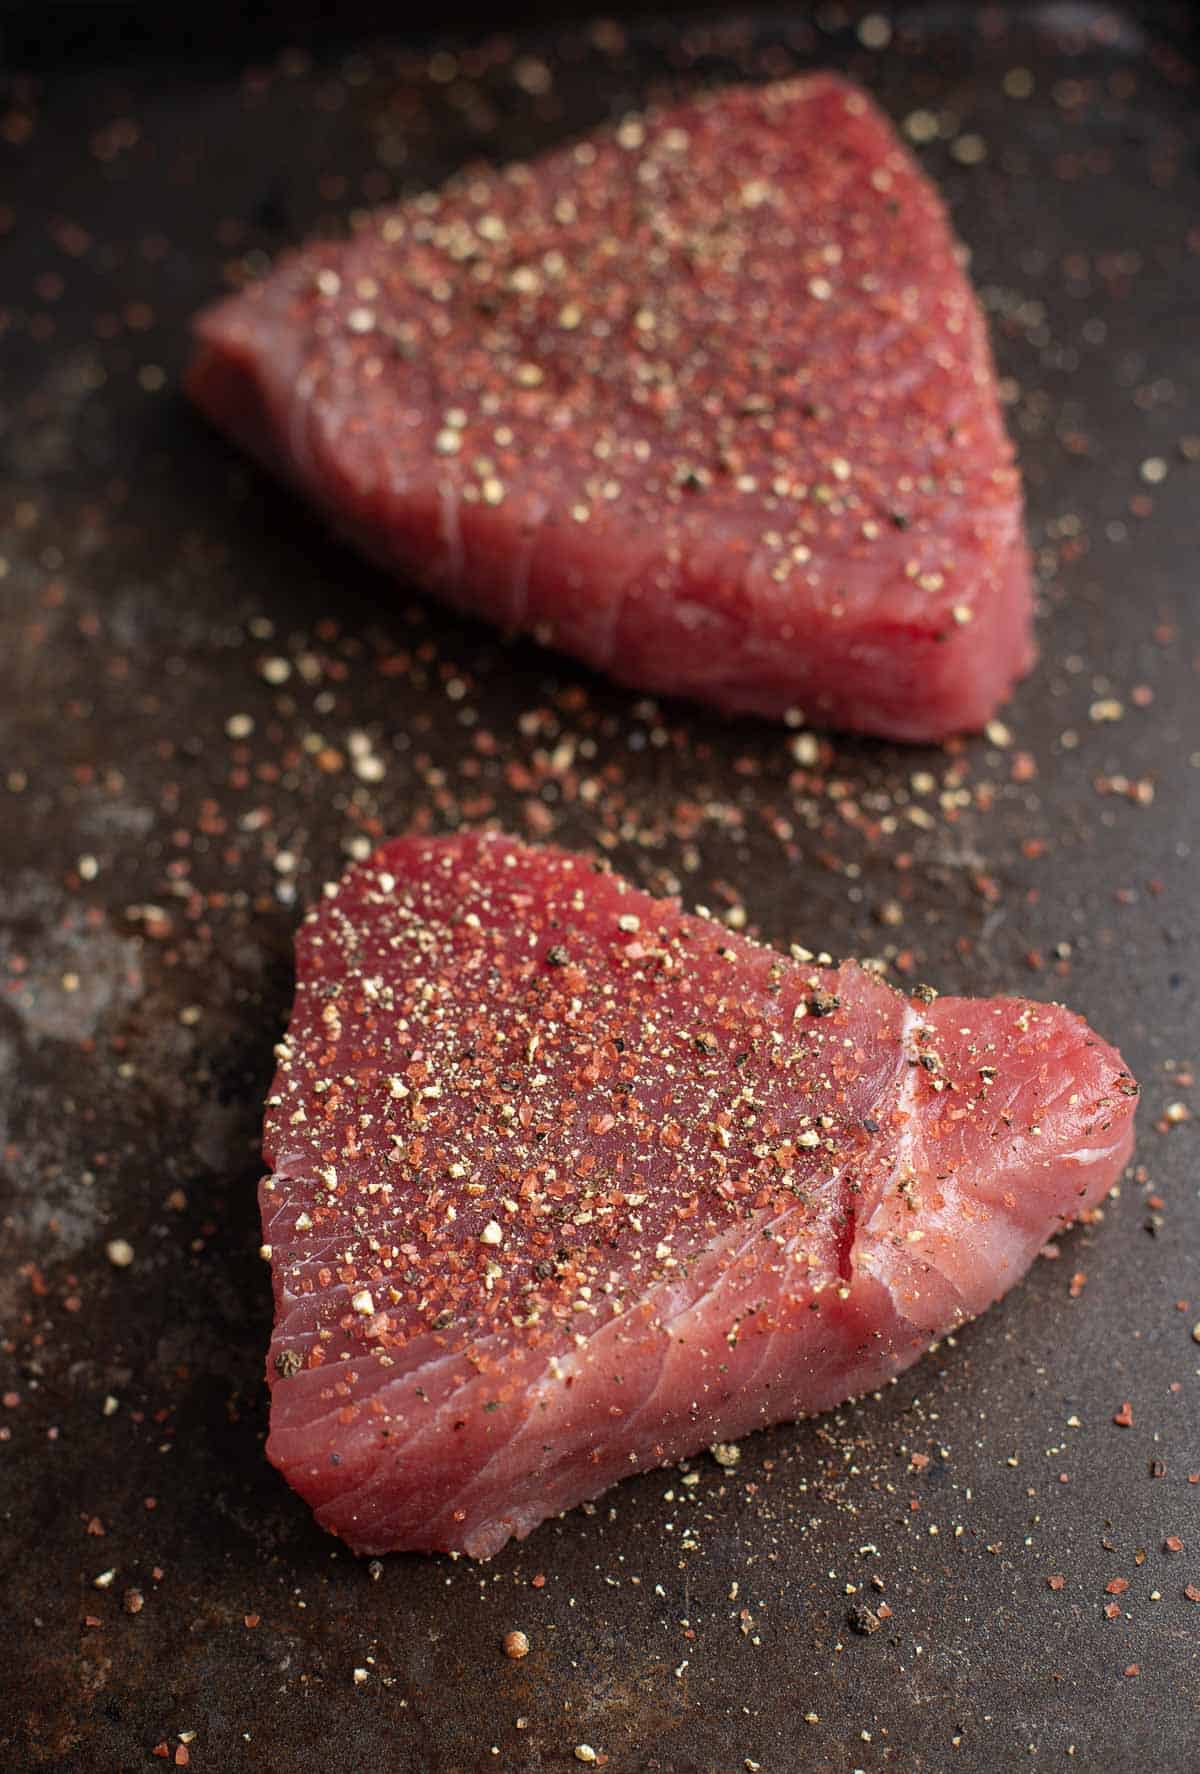 Seasoned raw tuna steaks. Specifically ahi tuna.